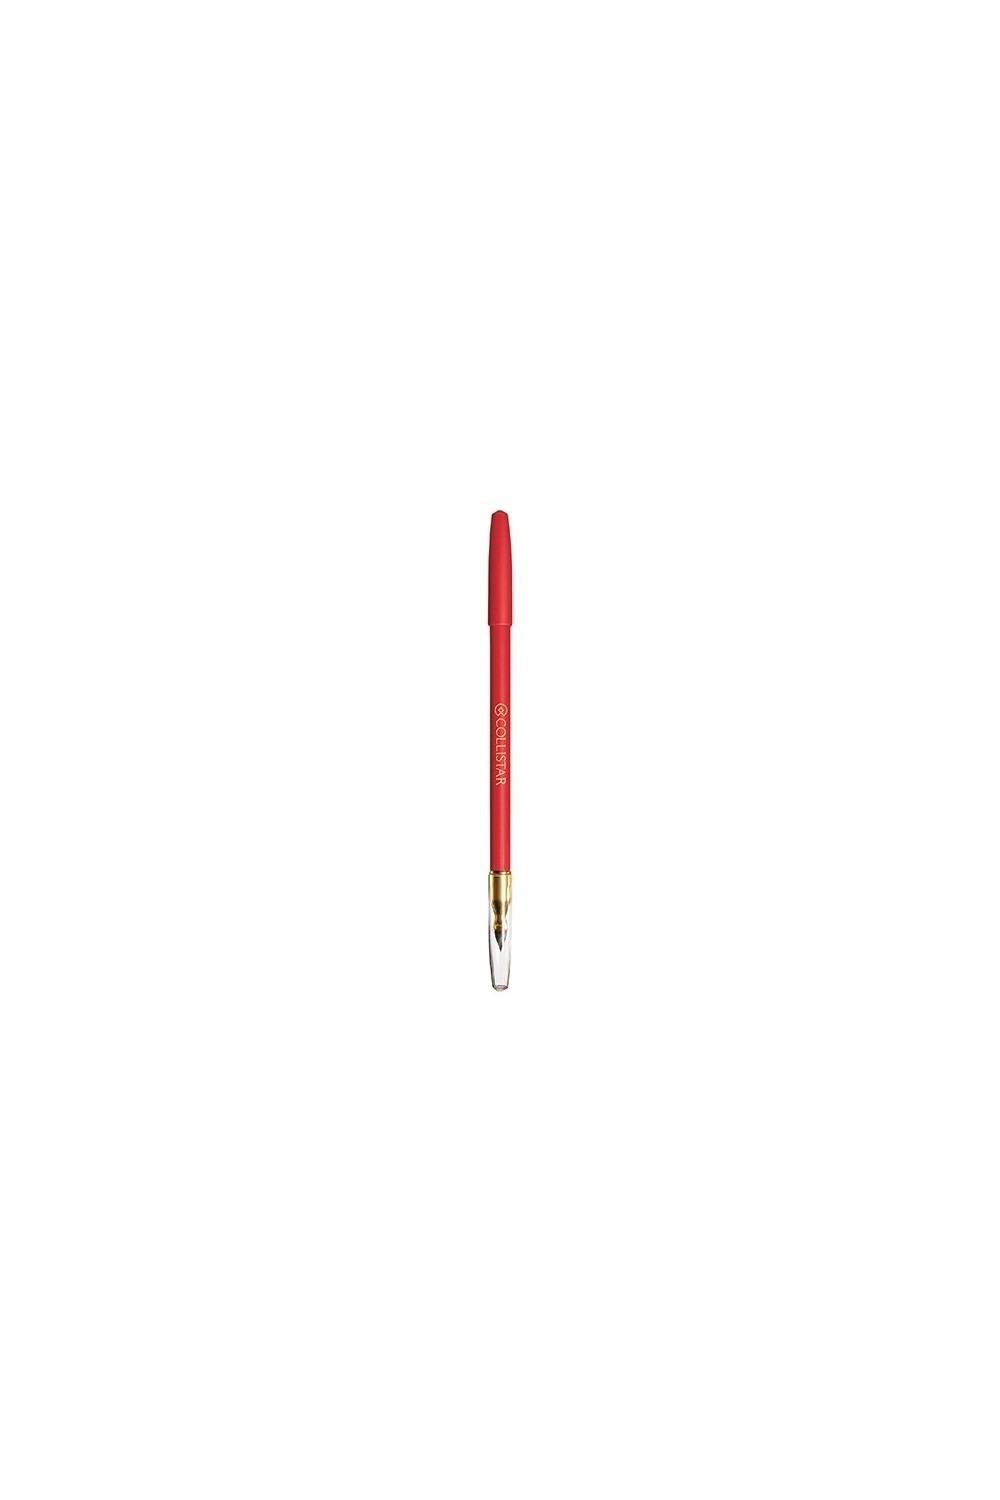 Collistar Professional Lip Pencil 07 Cherry Red 1,2g